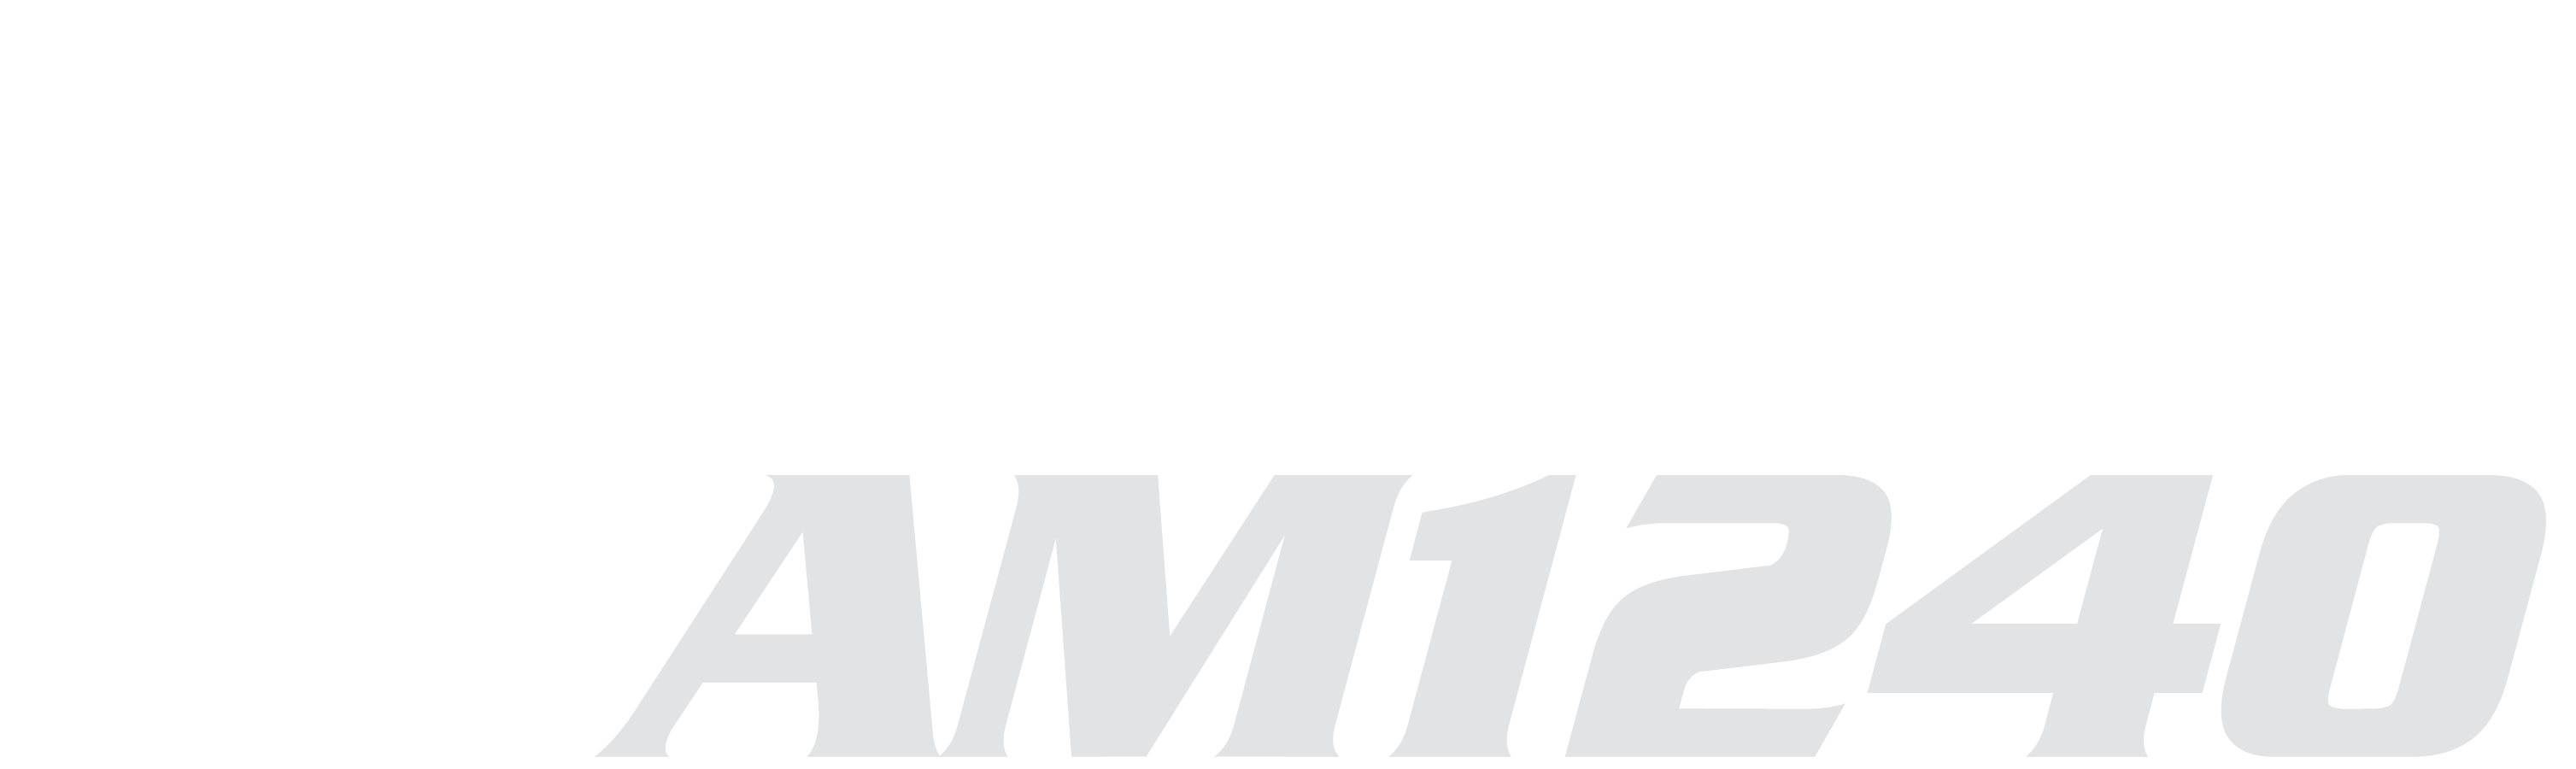 https://www.kfmo.com/images/logo/logo-screen-grayscale-light-transparent-border.png